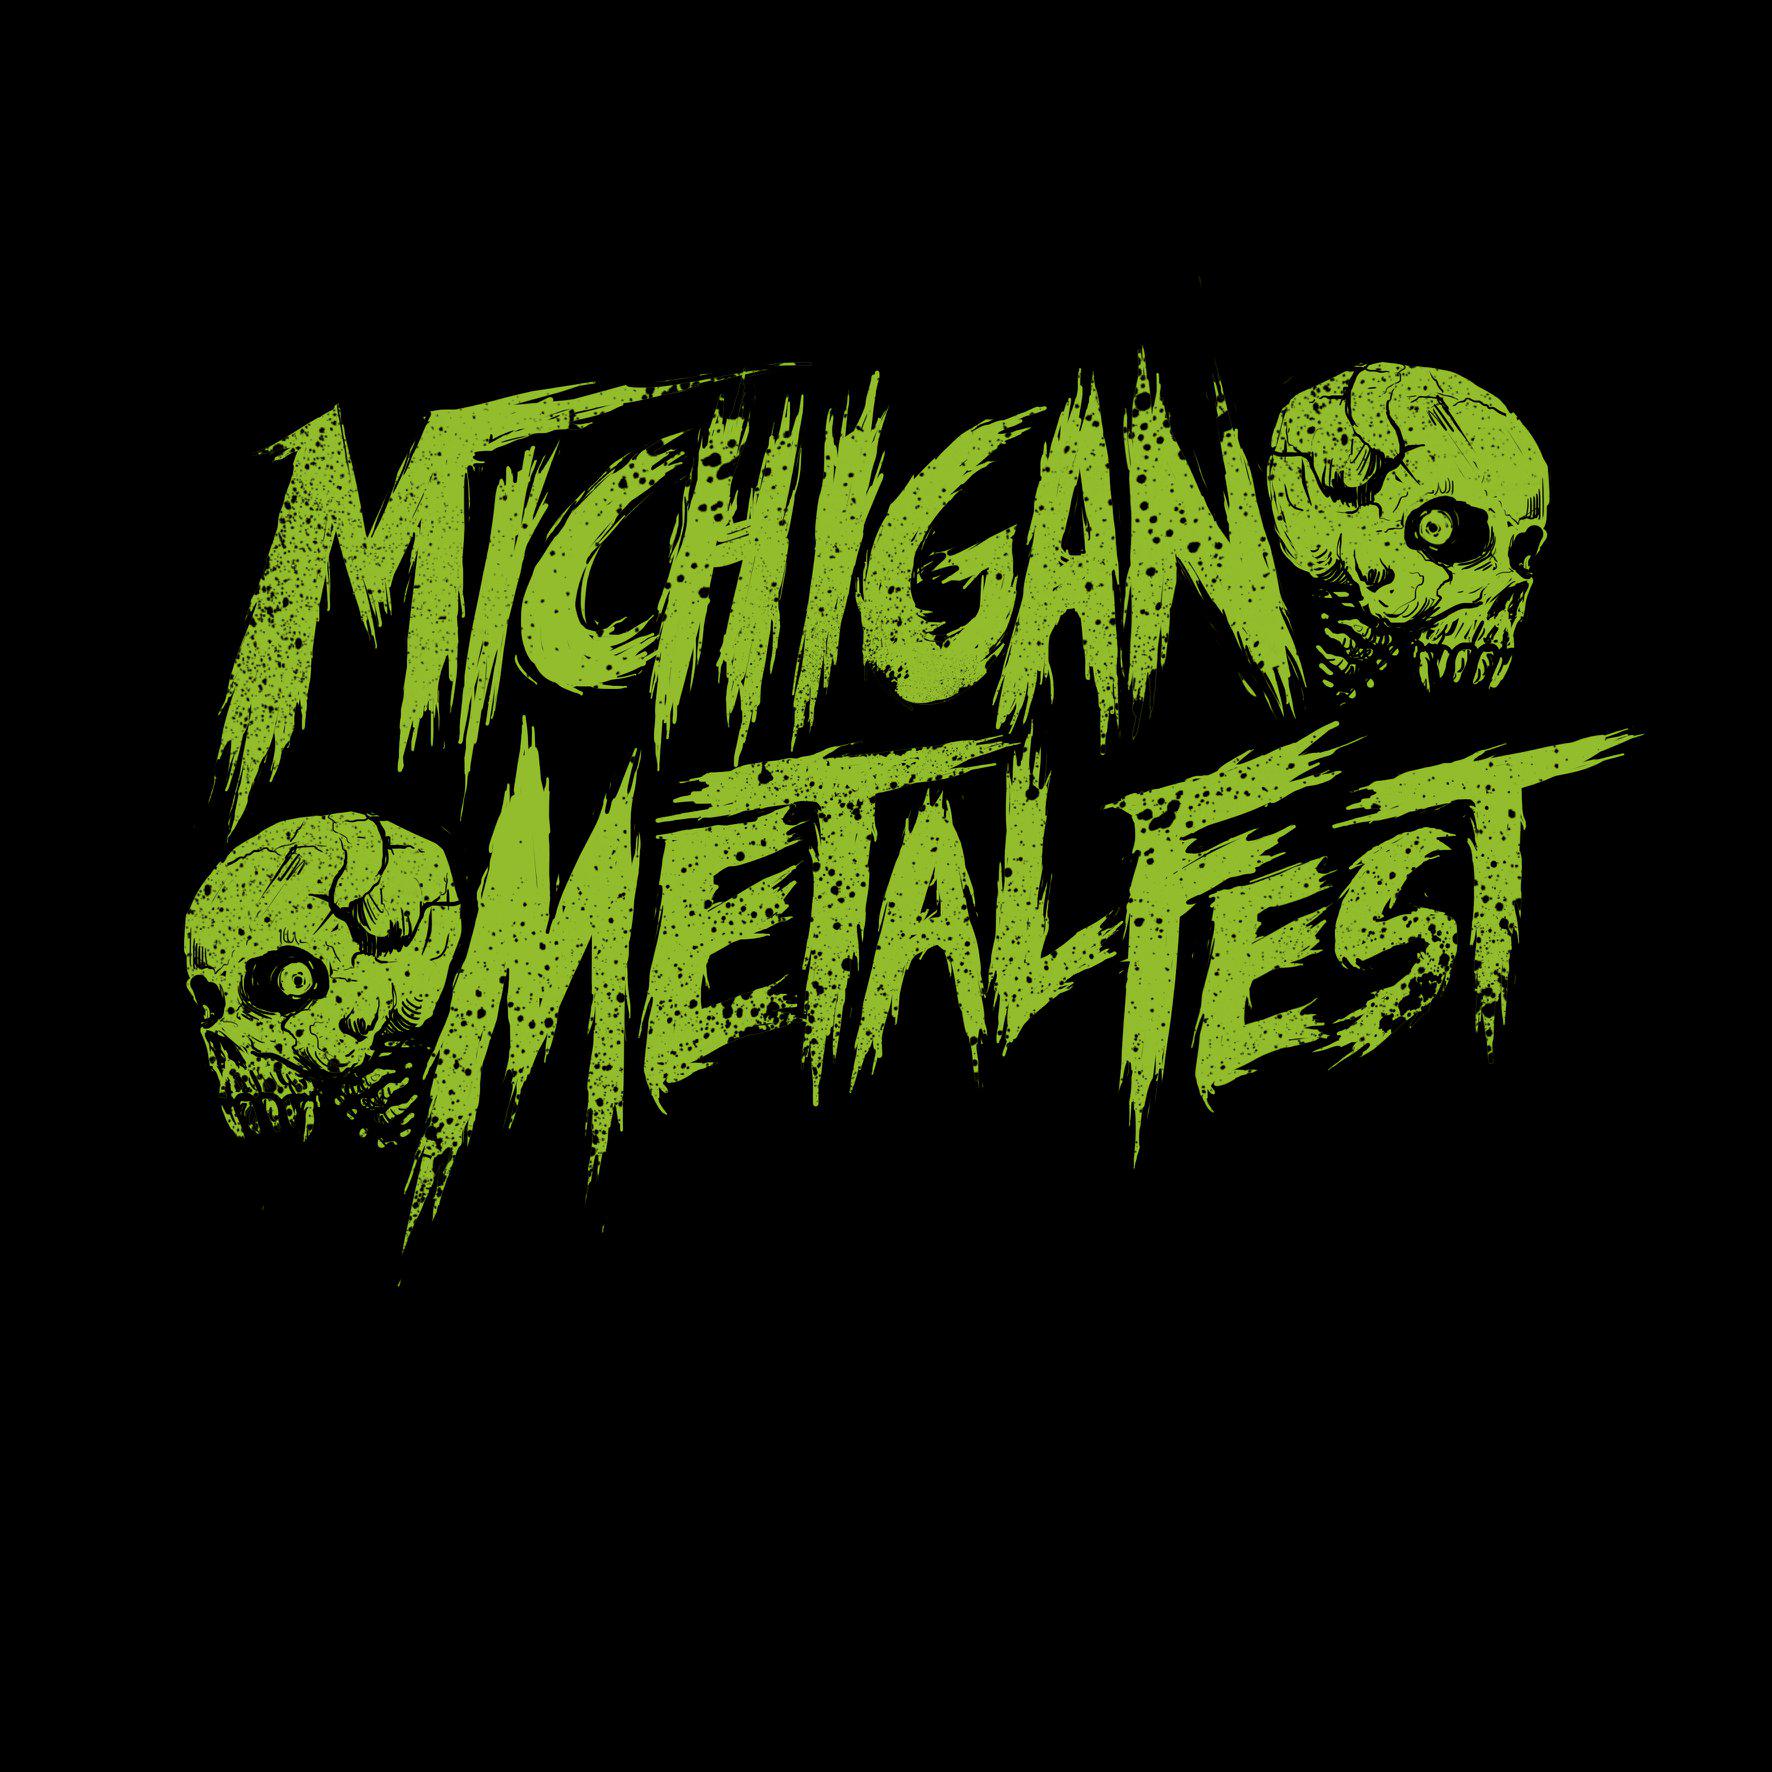 Michigan Metal Fest